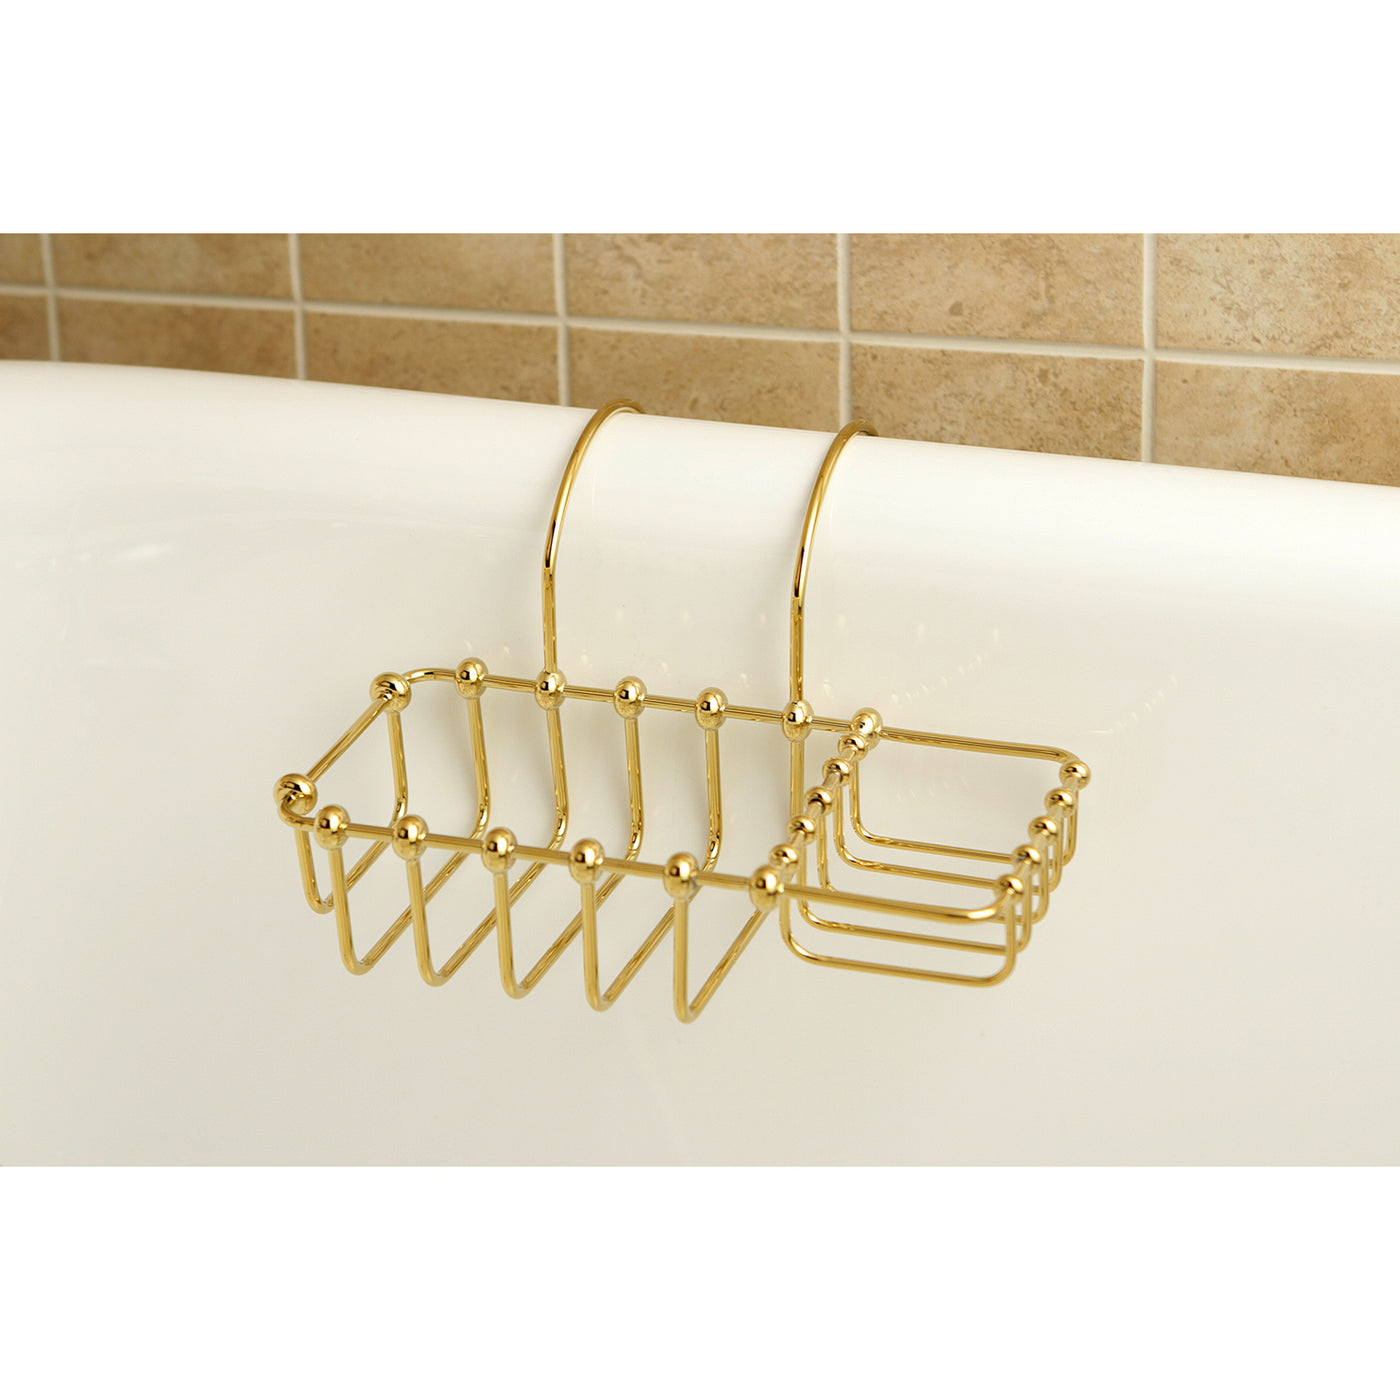 Elements of Design DS2162 Clawfoot Tub Rim Soap and Sponge Holder, Polished Brass